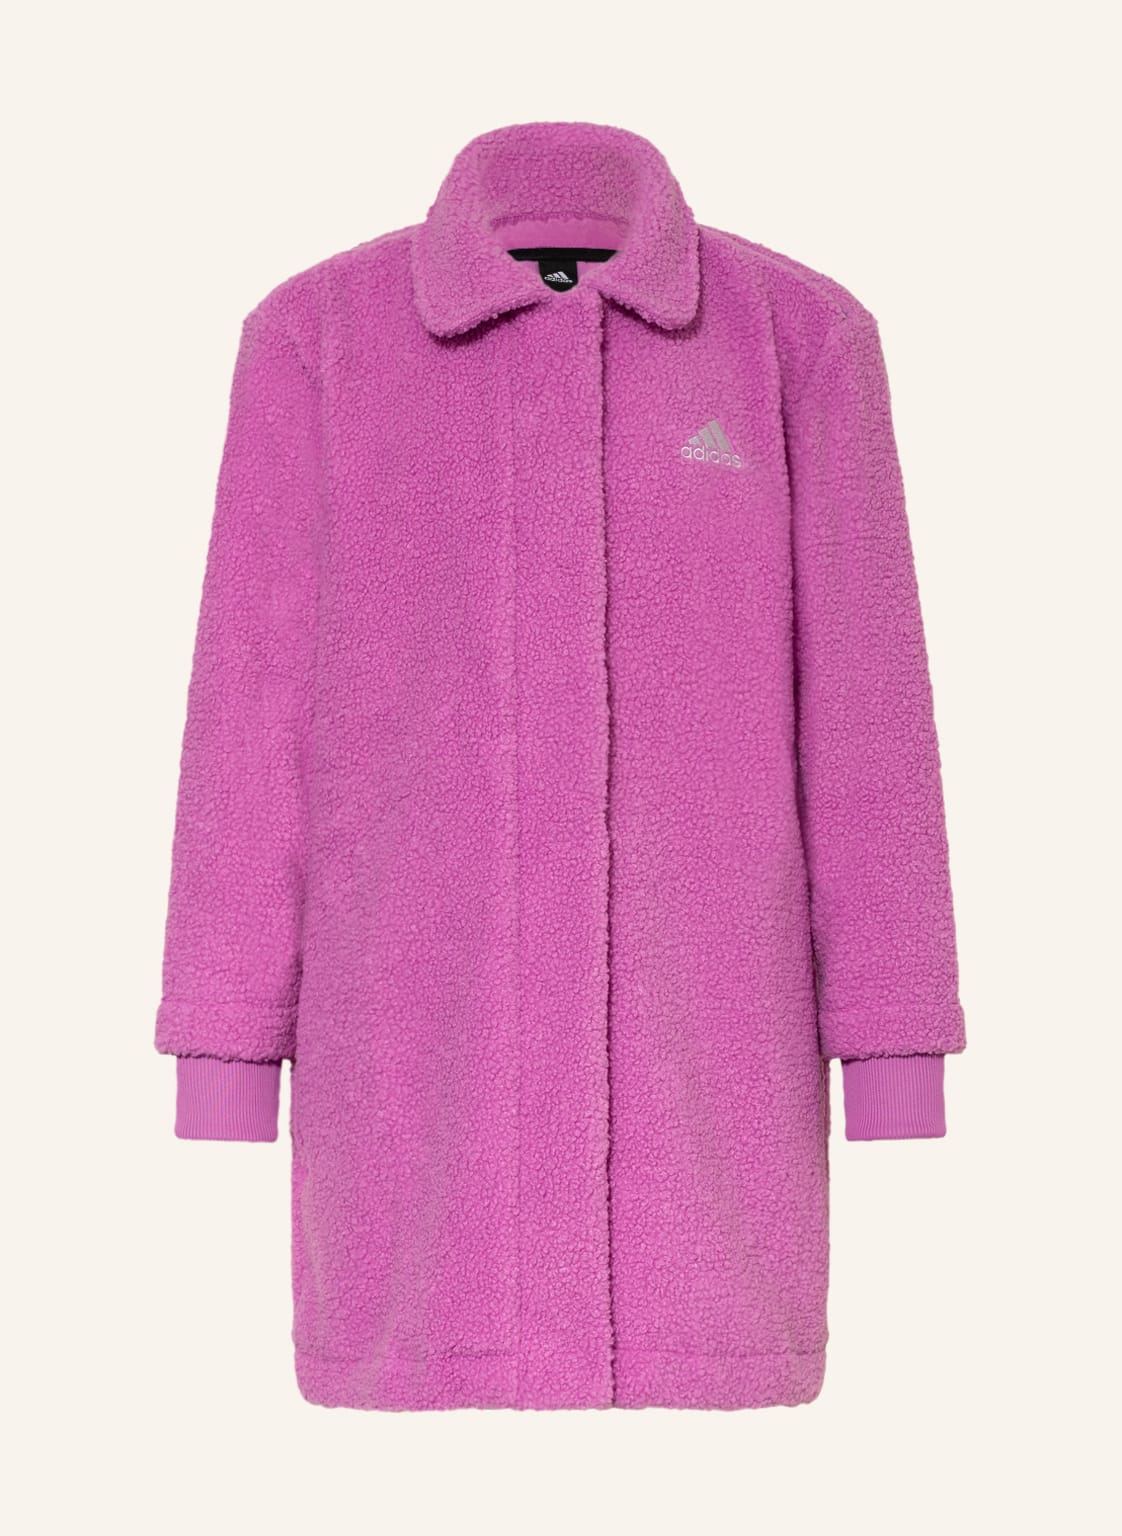 Image of Adidas Teddyfell-Mantel pink